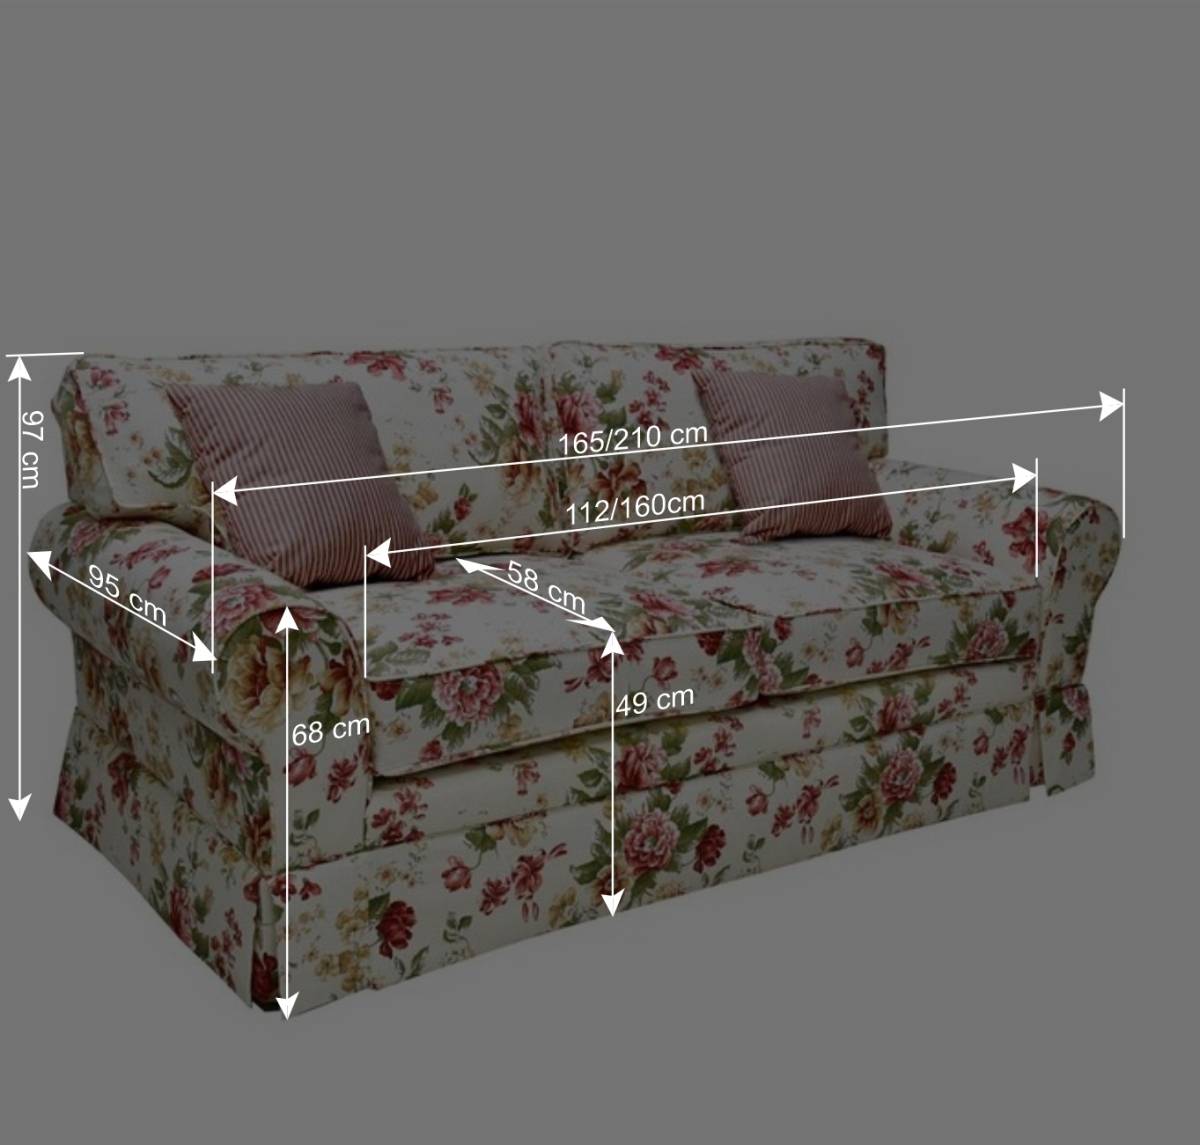 Romantisches Landhaus Sofa mit Blumen Stoff - Telik